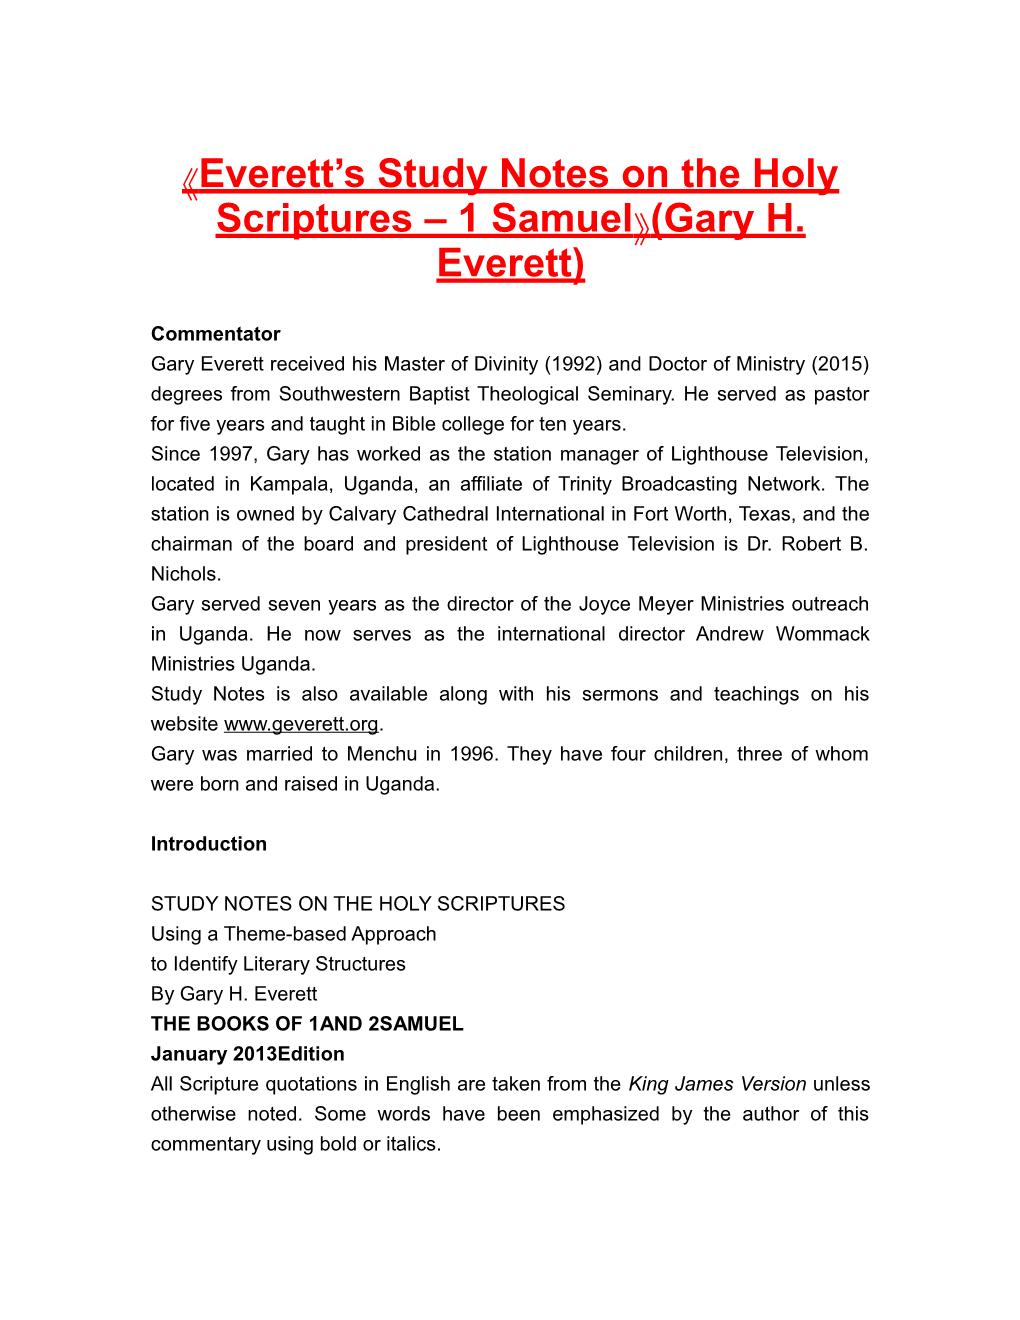 Everett S Study Notes on the Holy Scriptures 1 Samuel (Gary H. Everett)